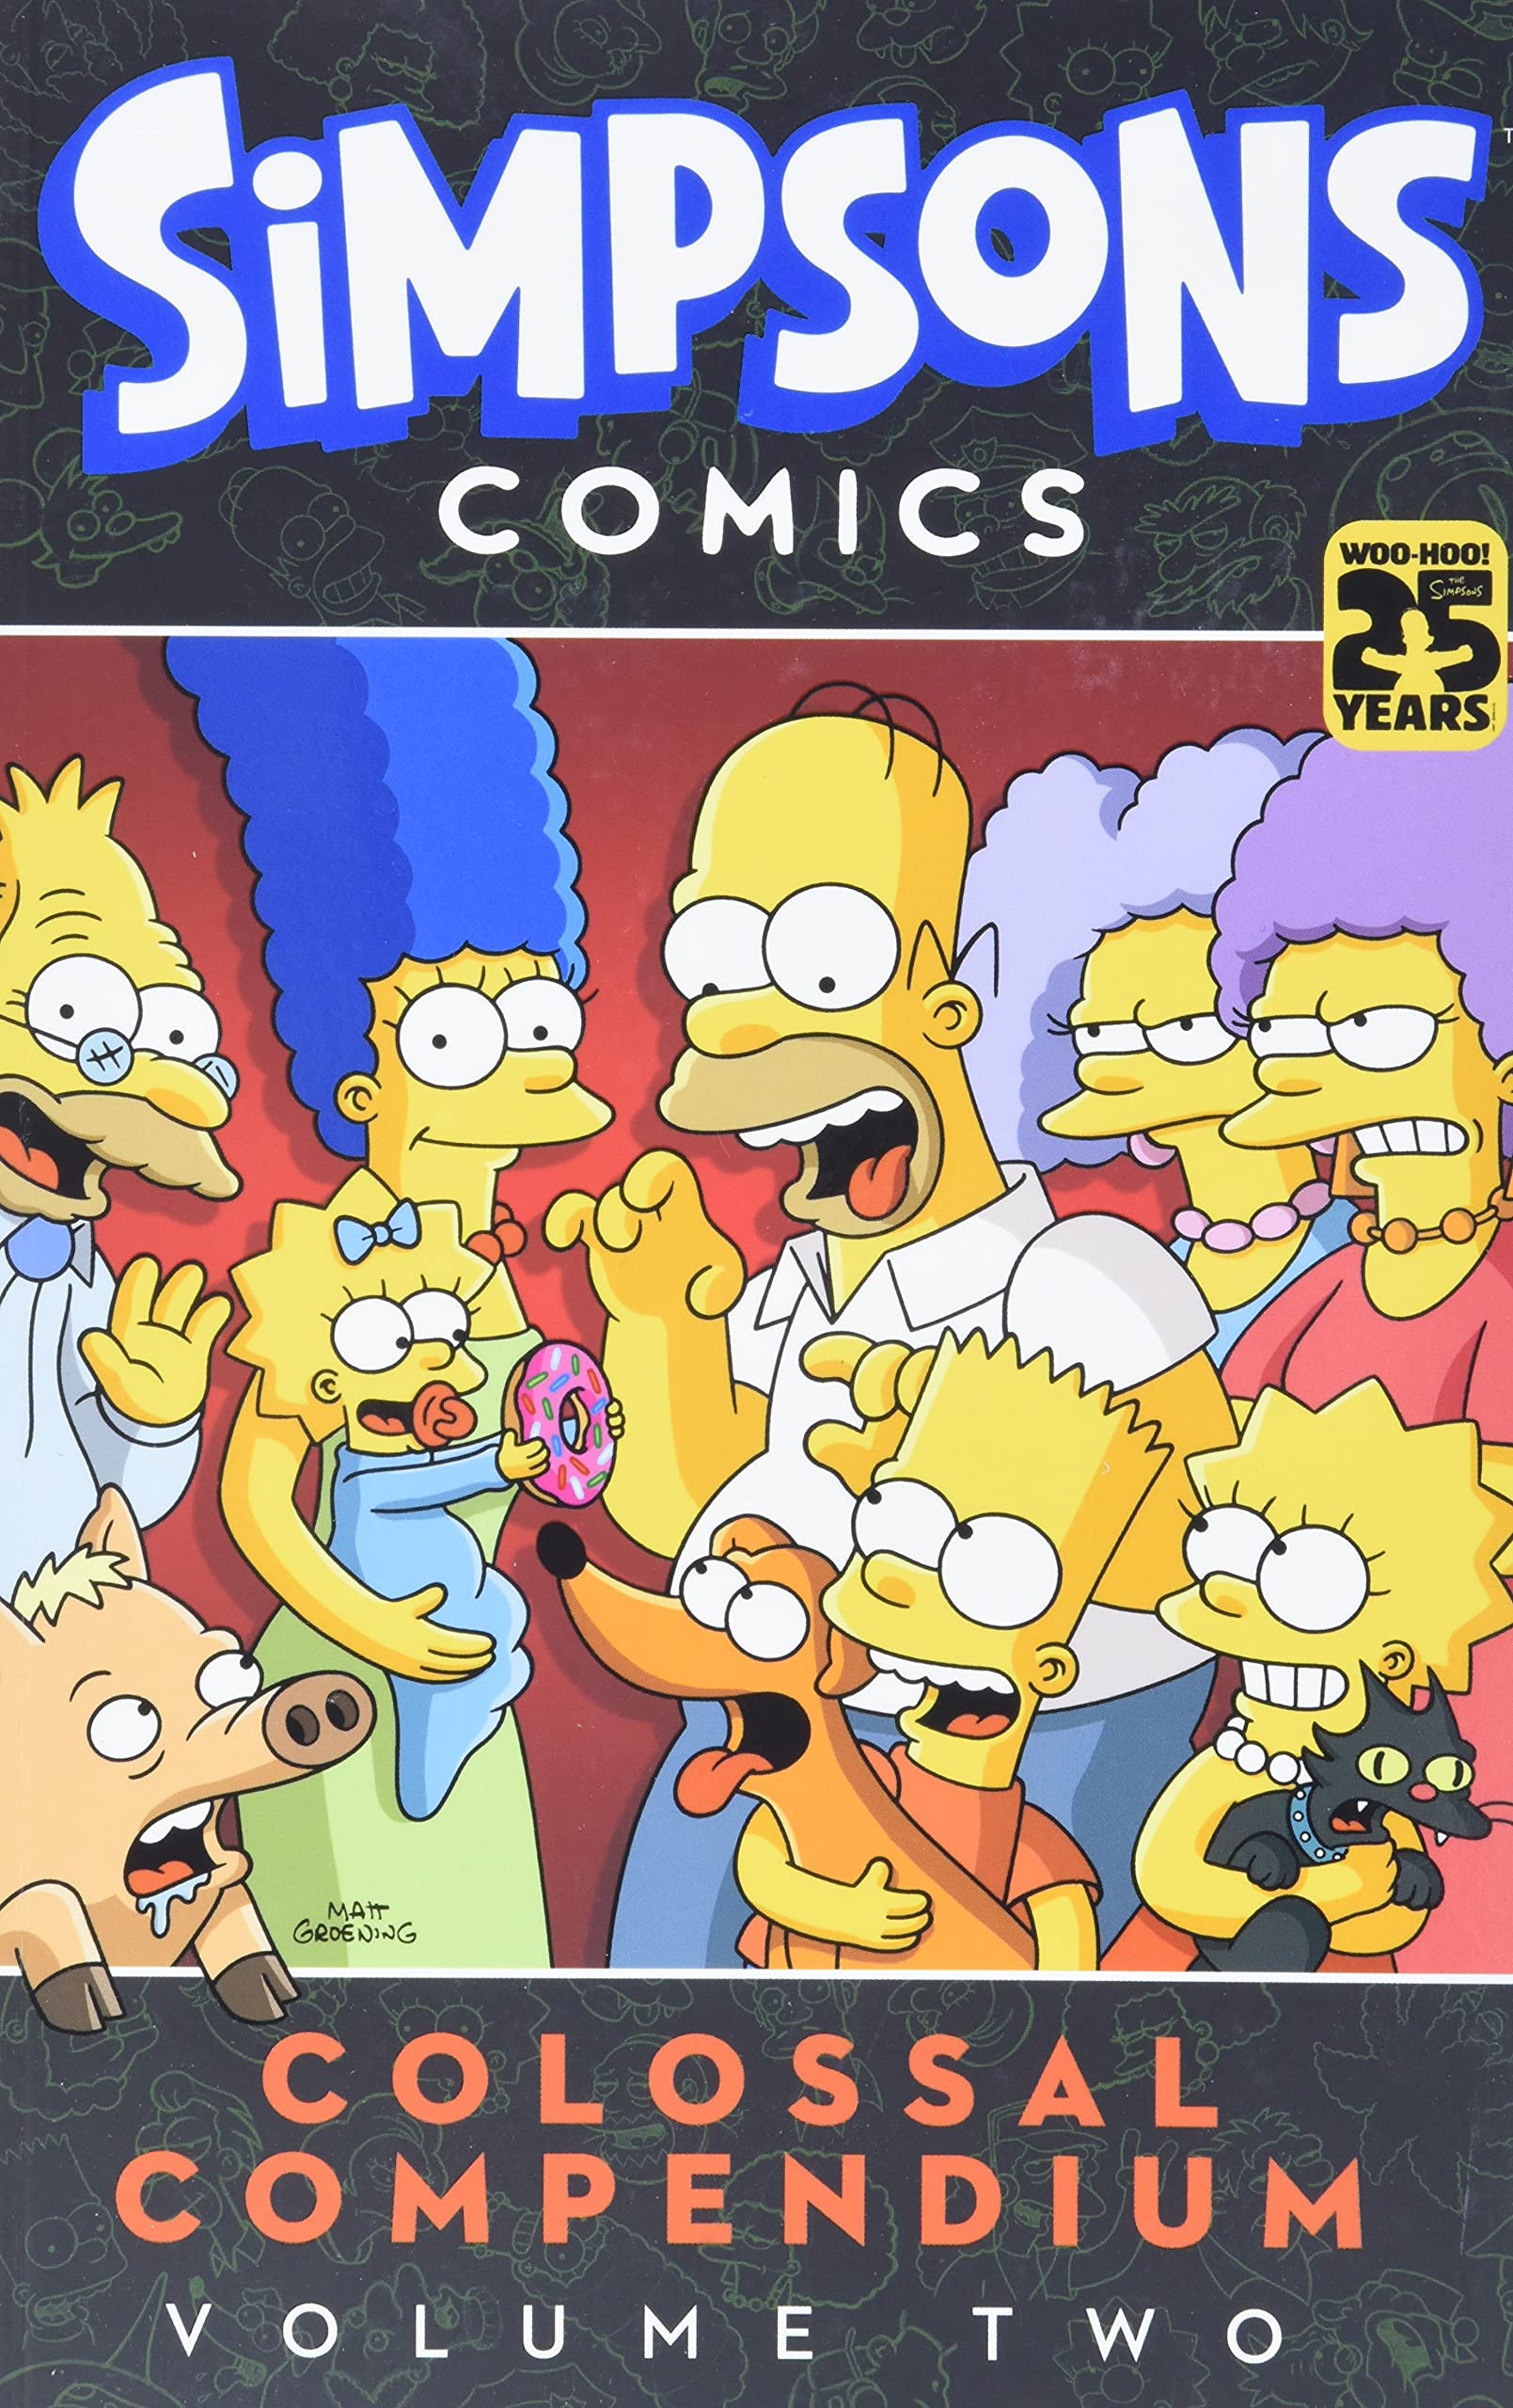 Simpsons Comics: Colossal Compendium Vol. 2 TP - Third Eye